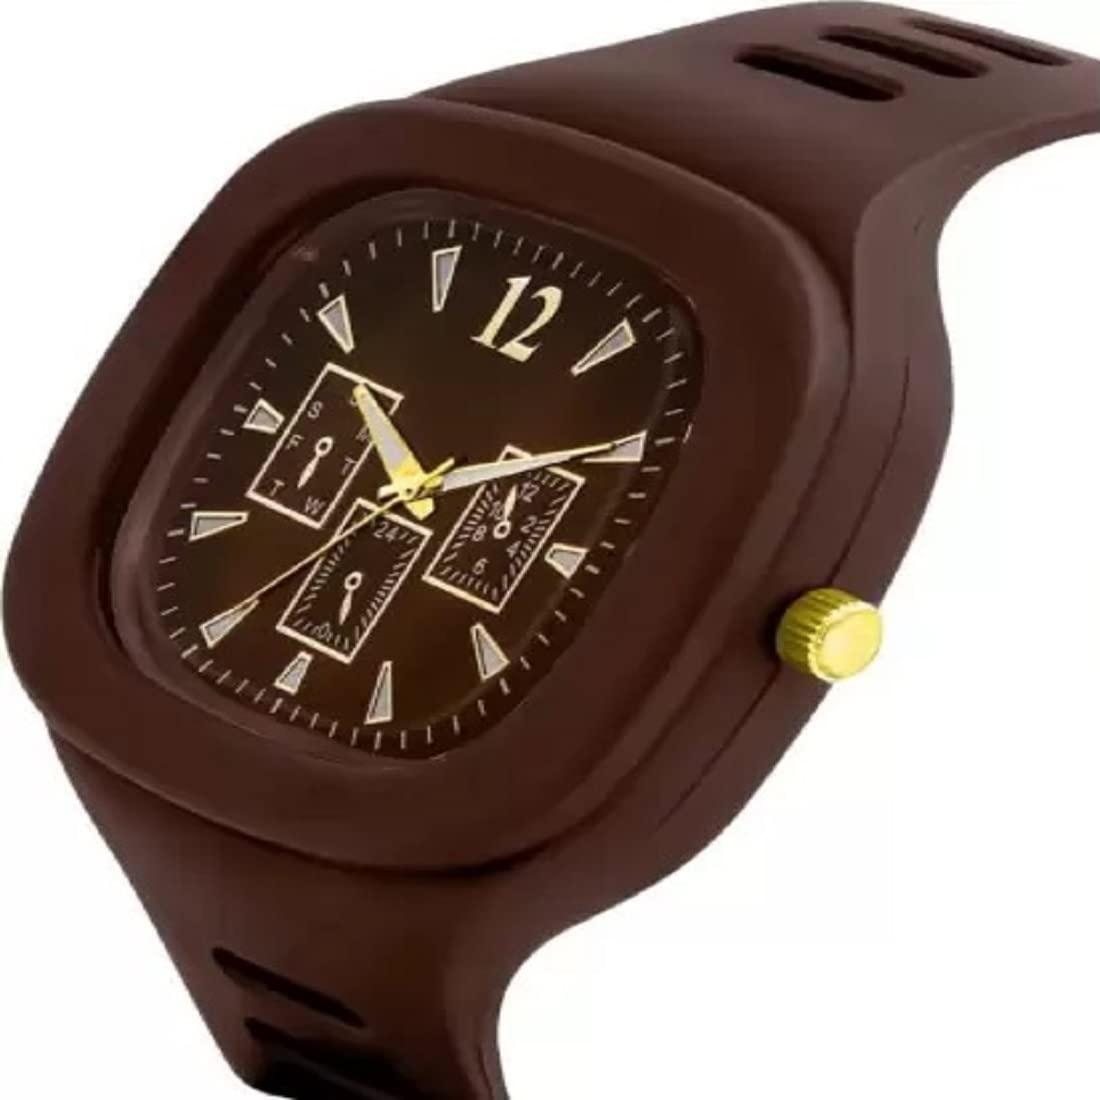 Acnos® Premium Brand - Square Brown DIAL Analog Silicon Strap ADDI Stylish Designer Analog Watch for Boys with bracelete Pack of 2 